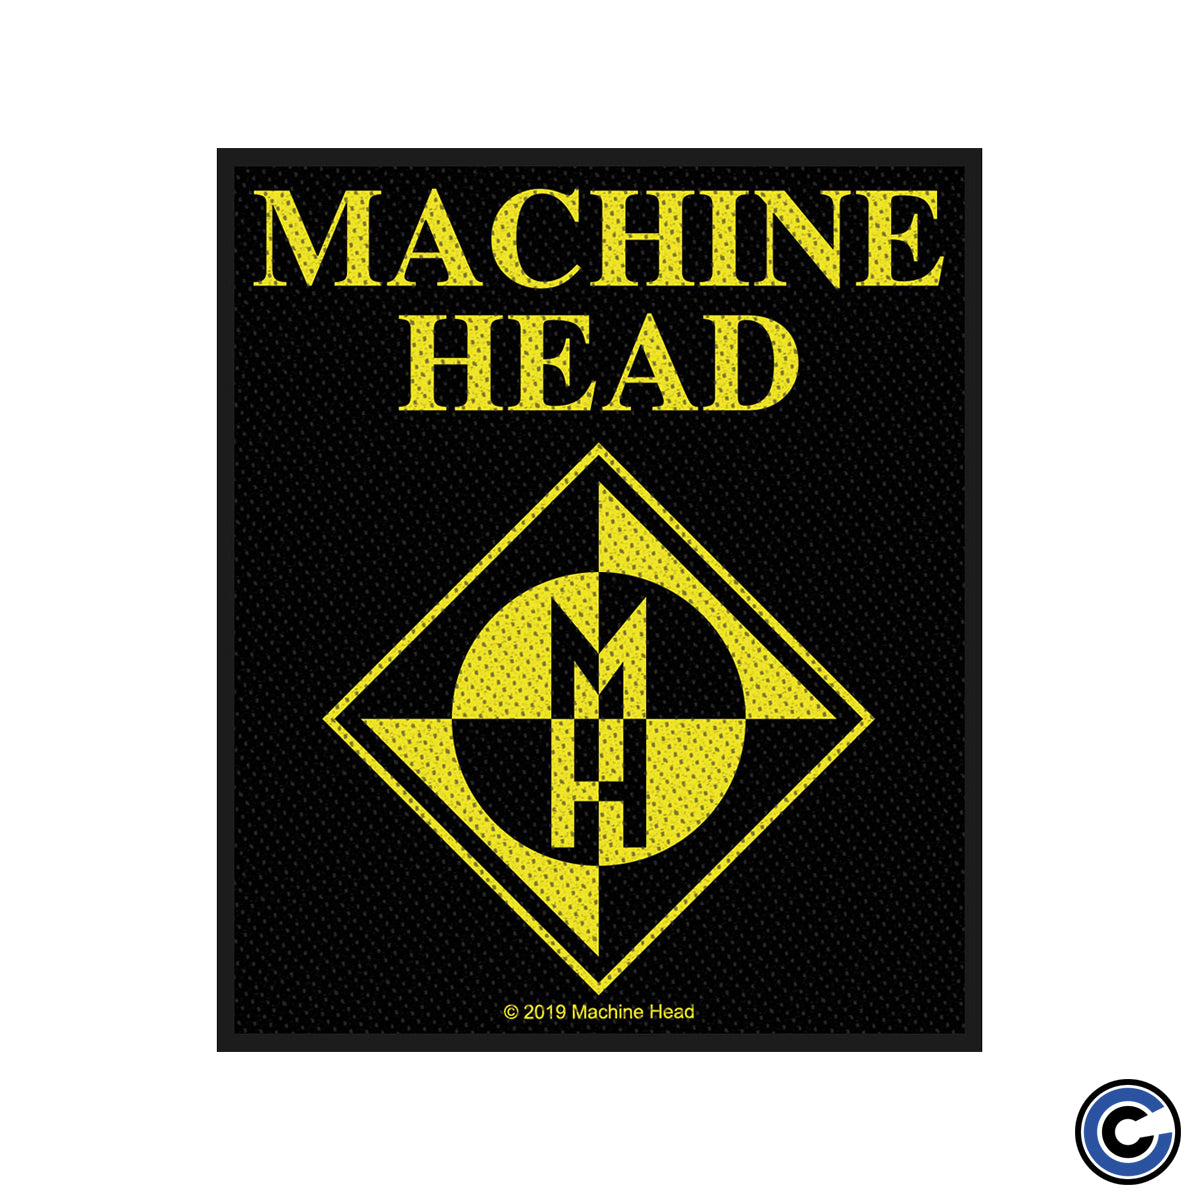 Machine Head "Diamond Logo" Patch